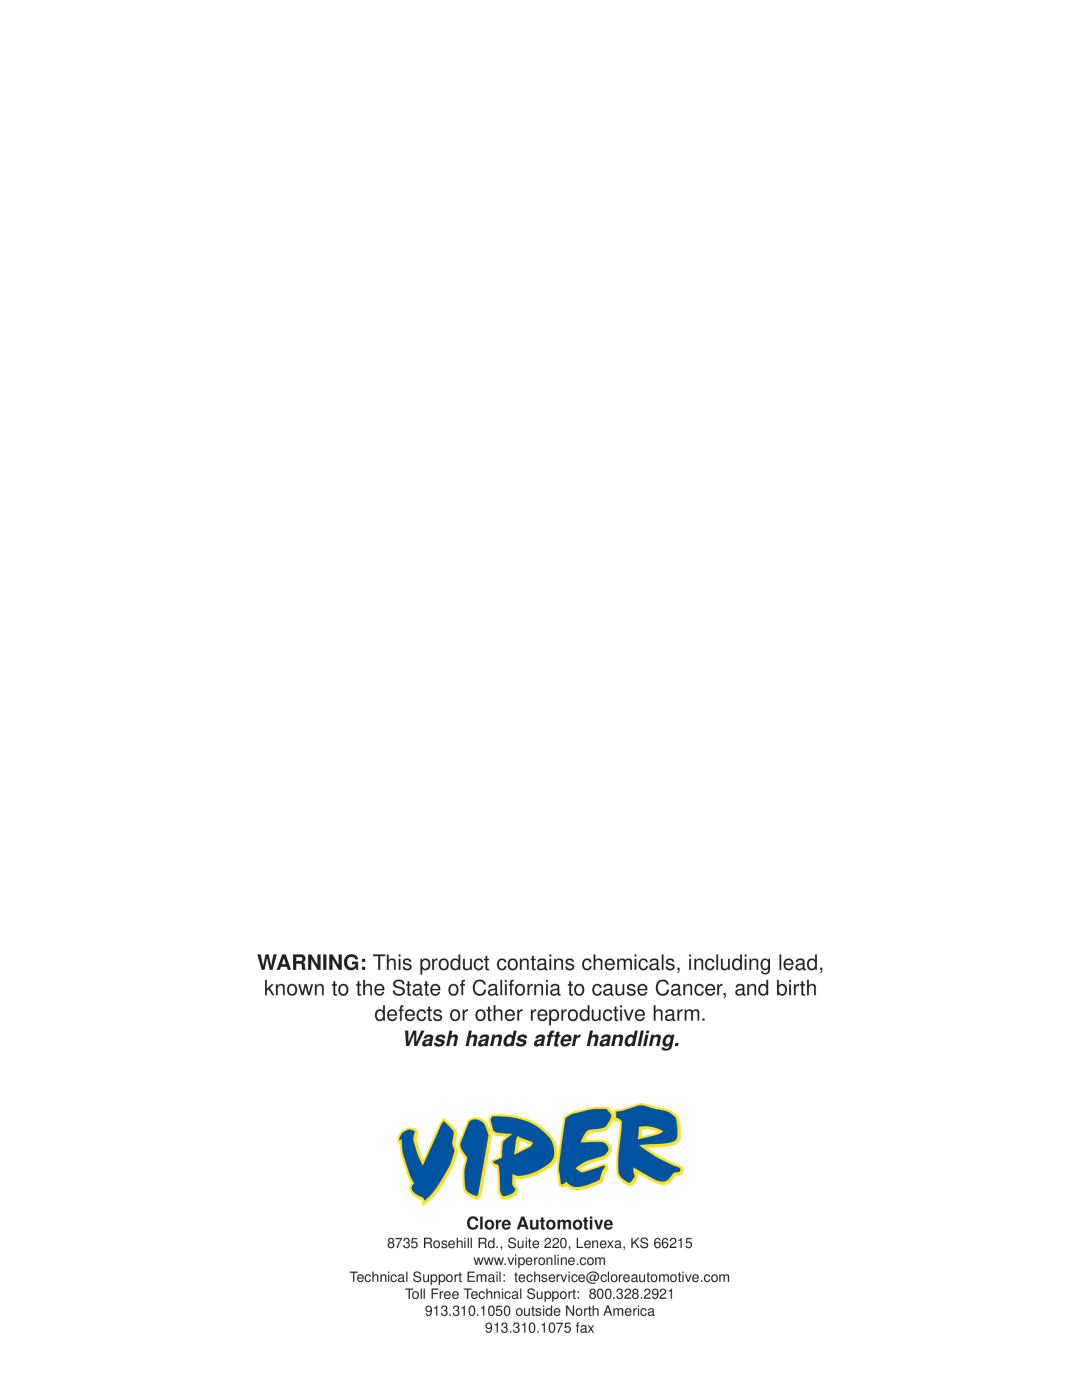 Viper VR-6000 Wash hands after handling, Clore Automotive, Rosehill Rd., Suite 220, Lenexa, KS, outside North America 